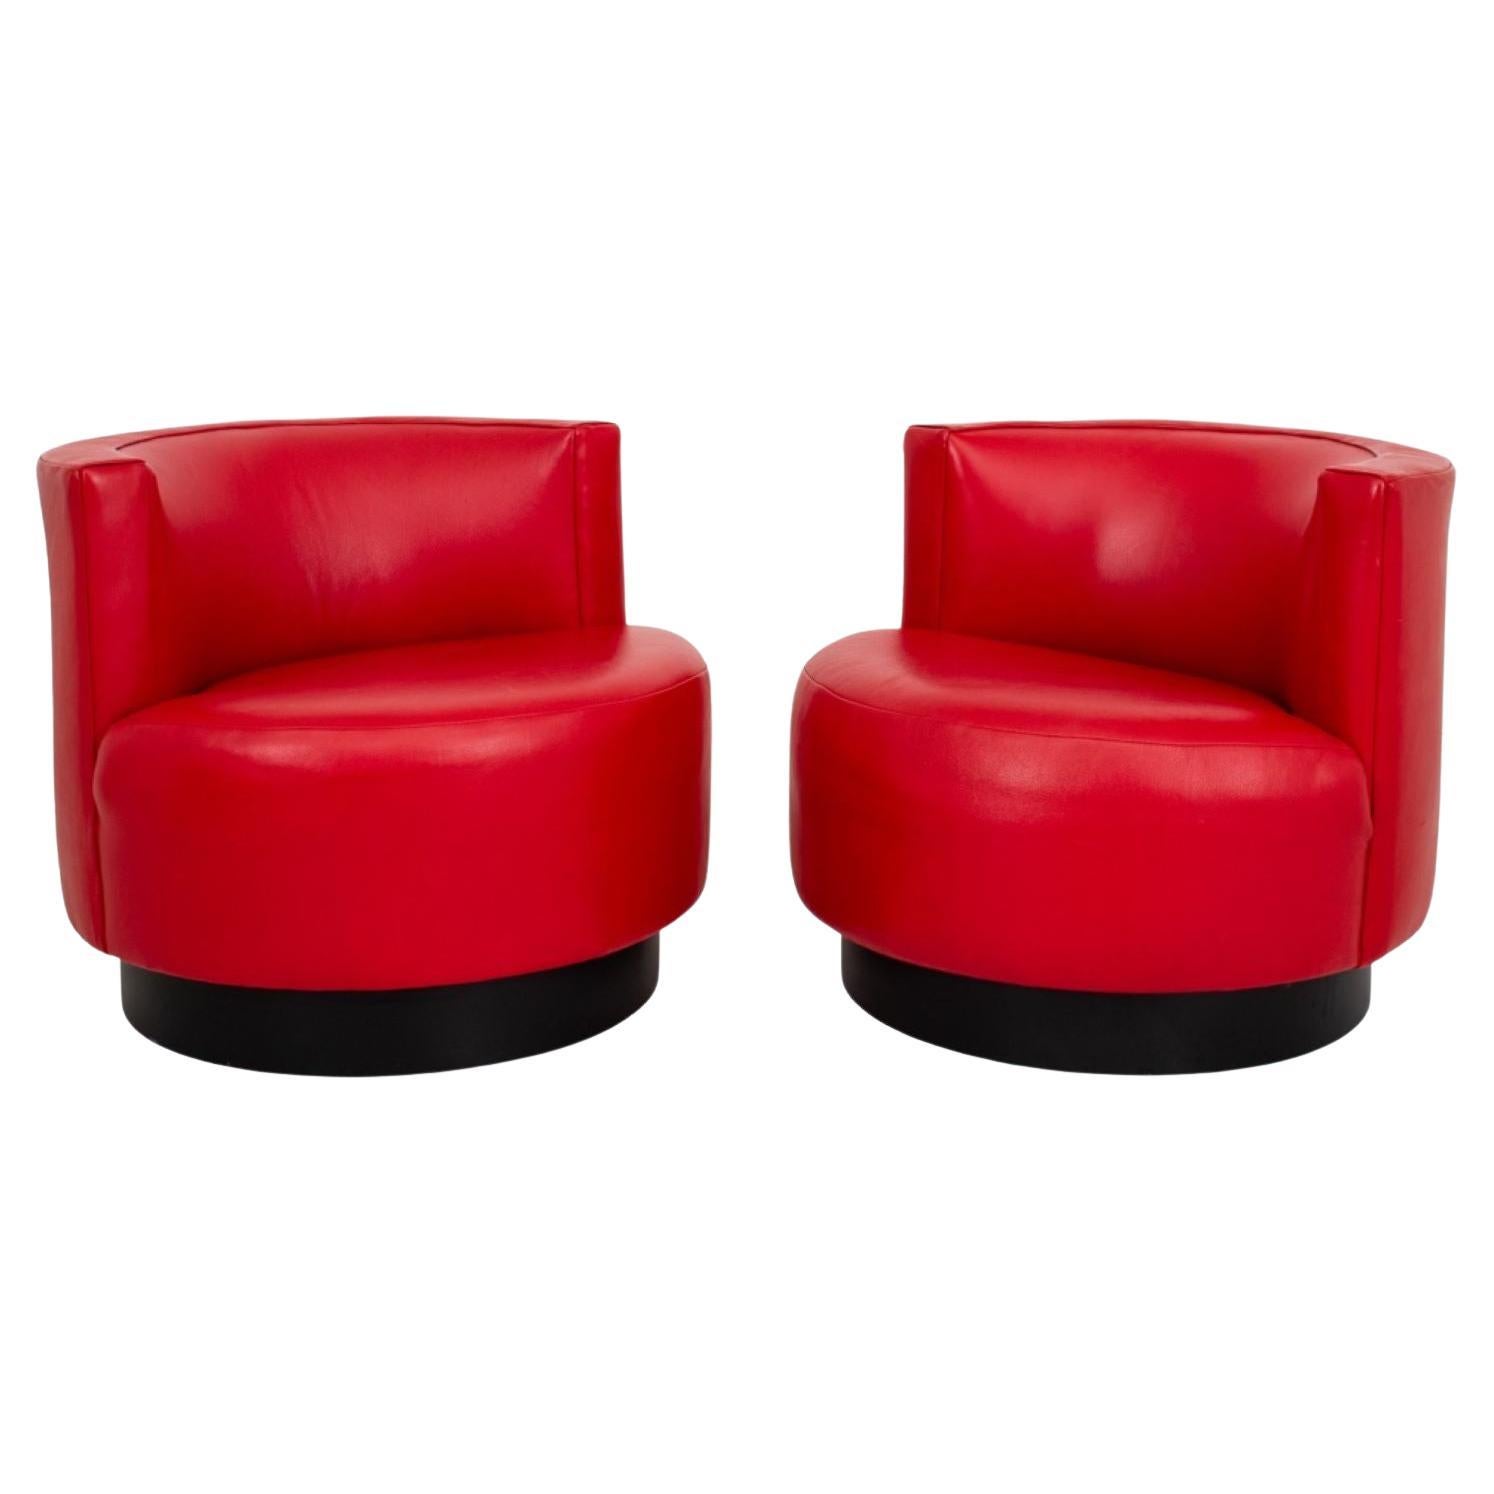 Italian Mid-Century Modern Style "Mala" Chairs, 2 For Sale